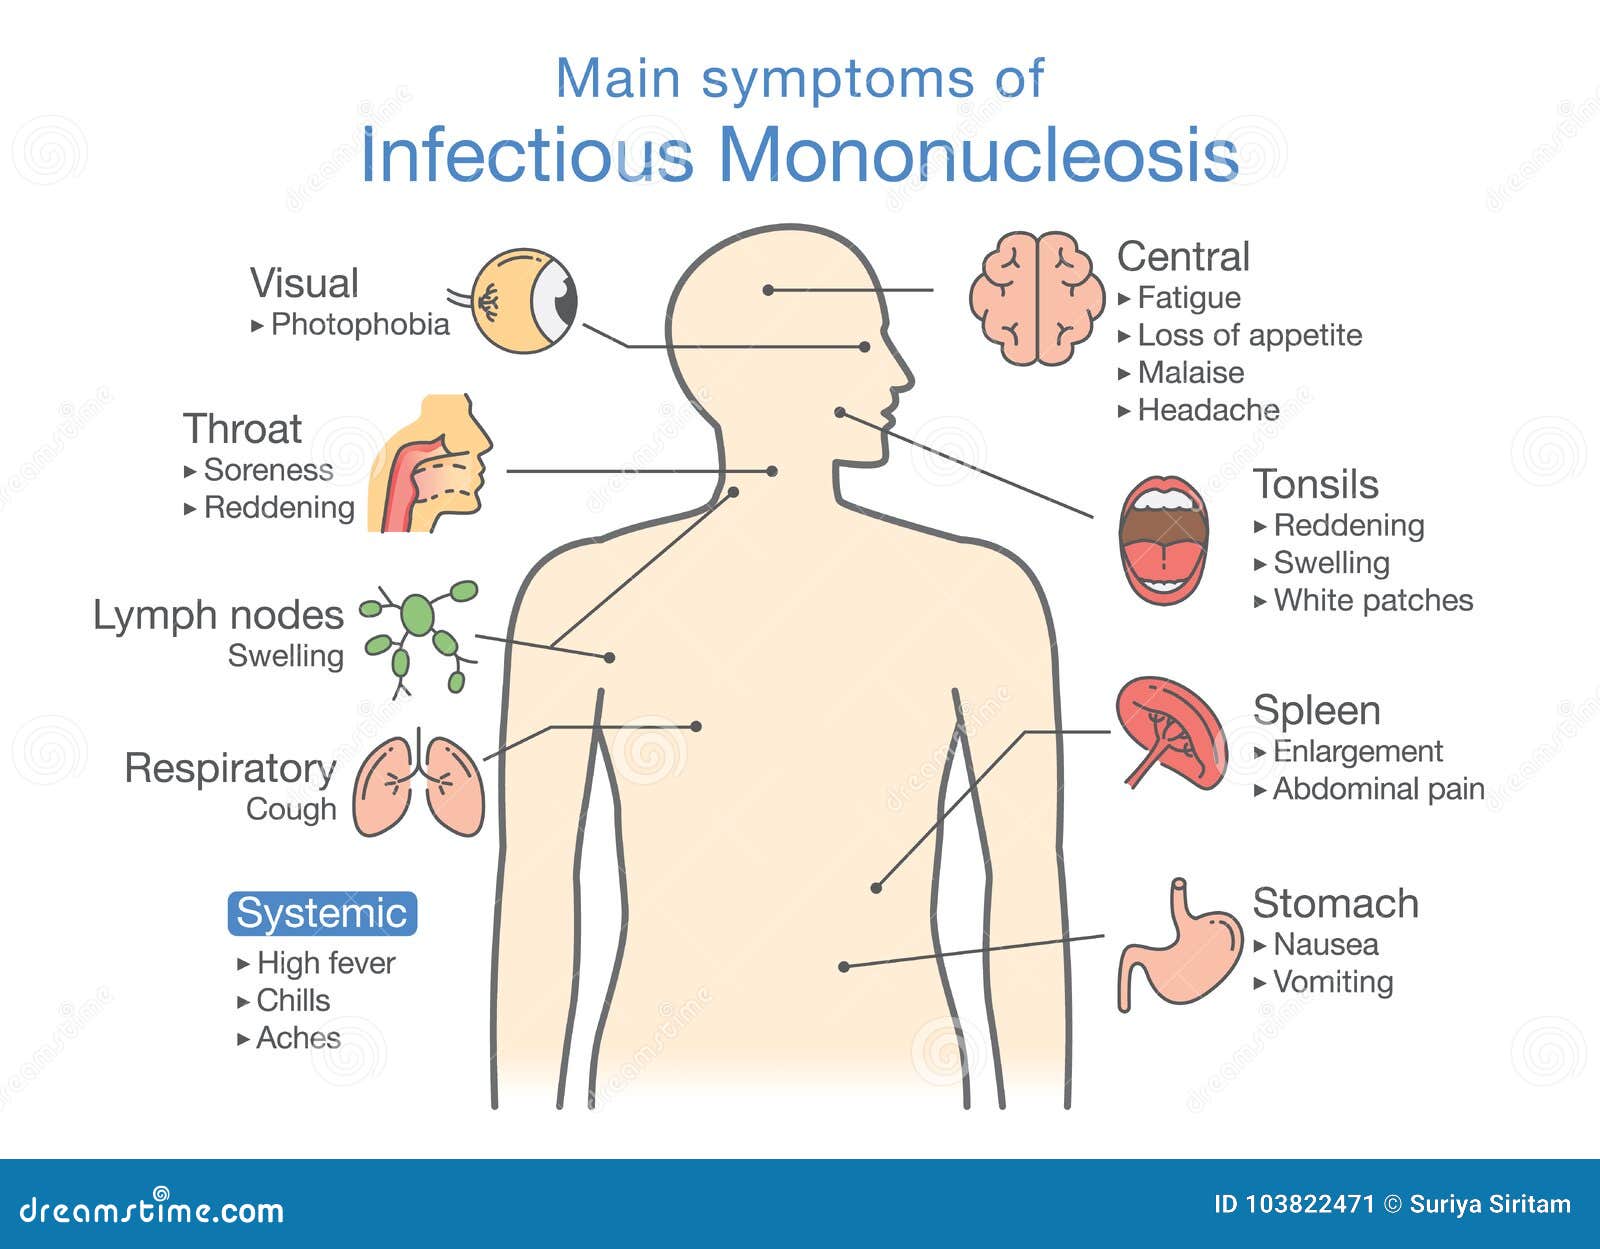 symptoms of infectious mononucleosis disease.